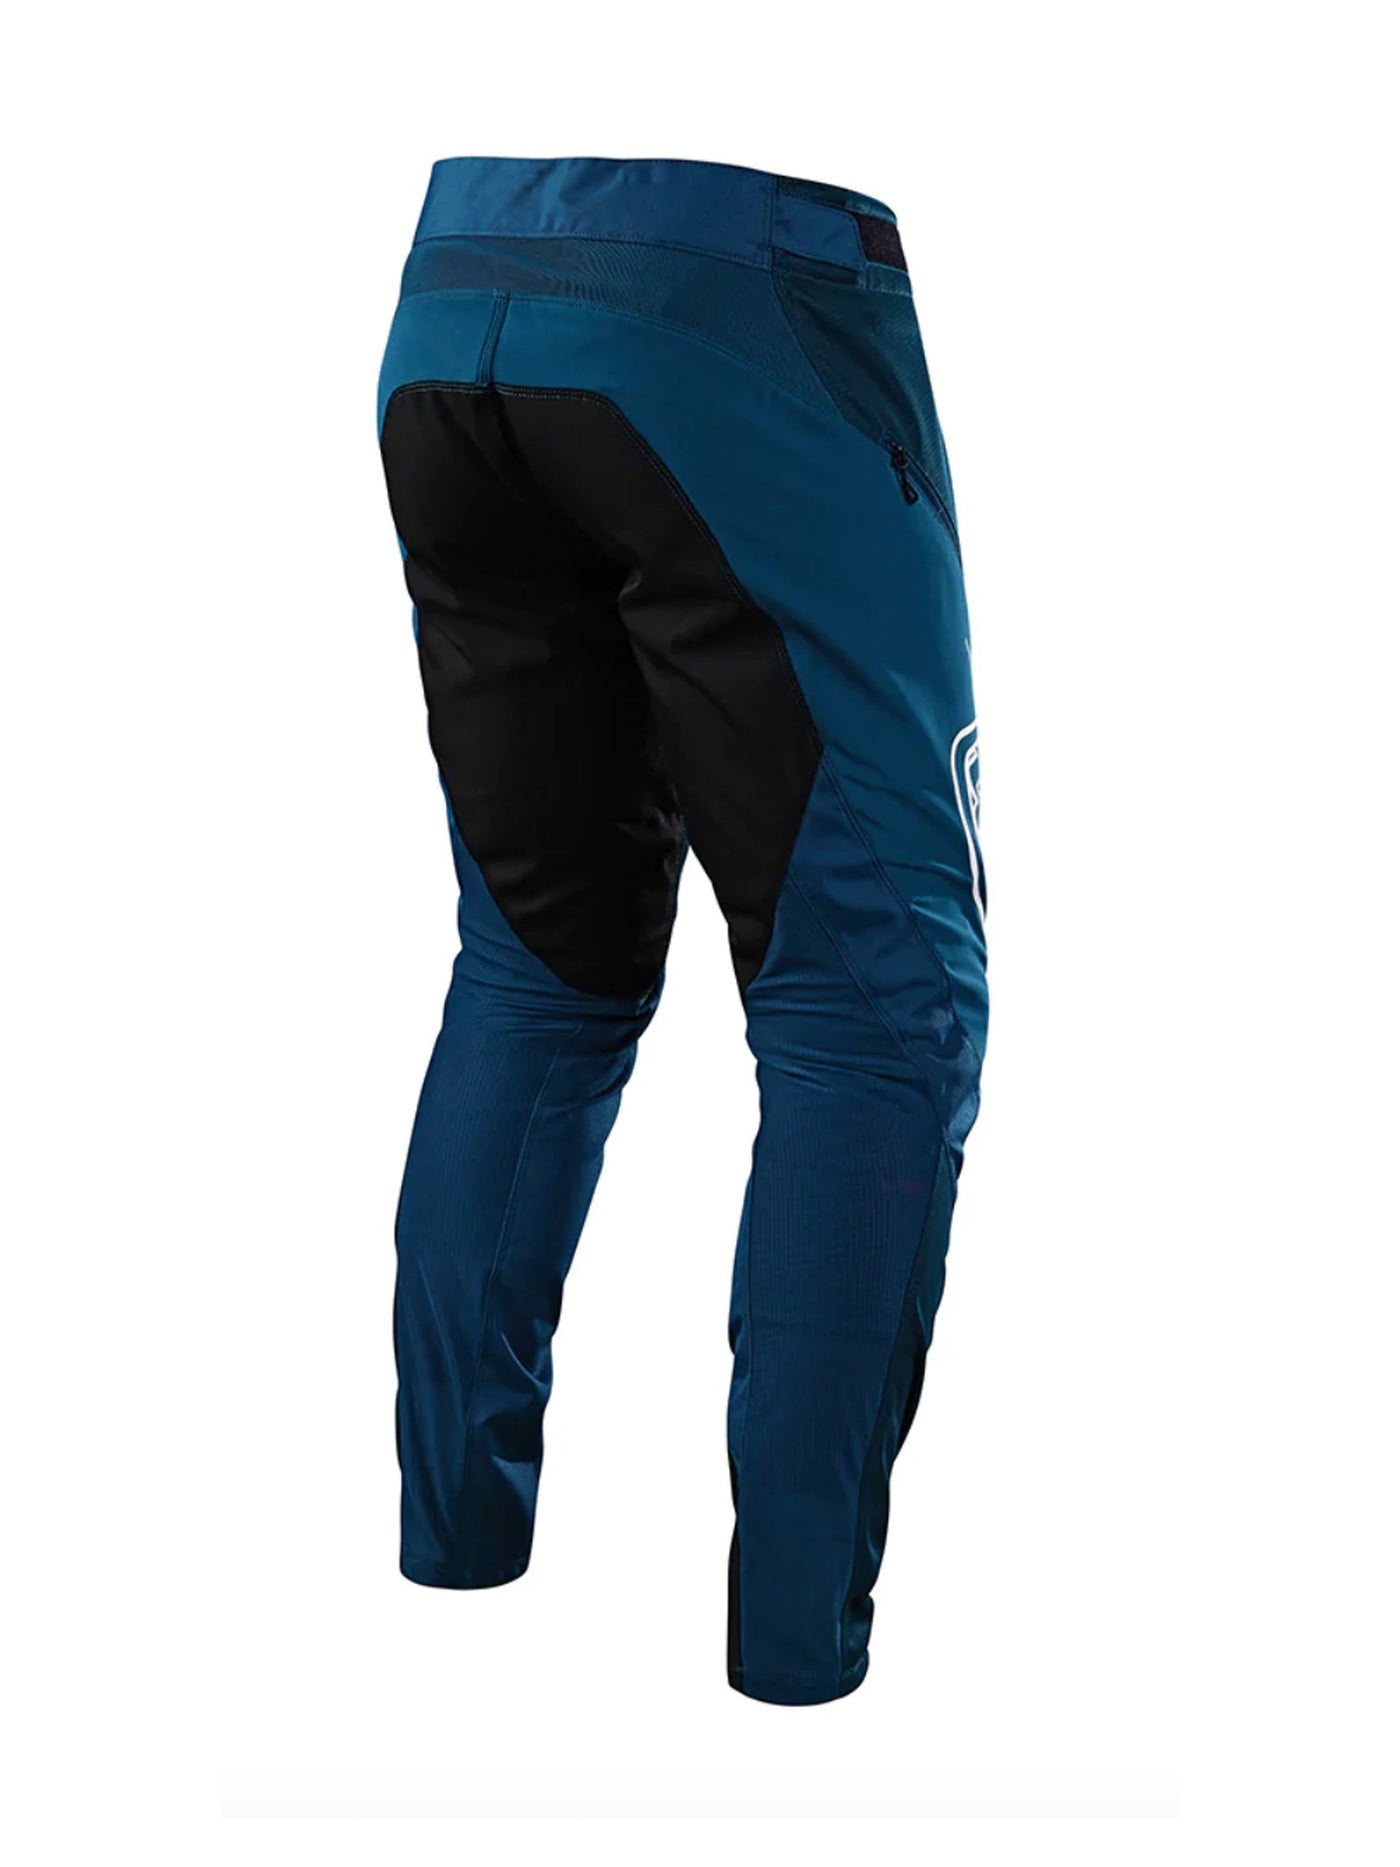 Troy Lee Designs Pantalones De Bicicleta Sprint Azul